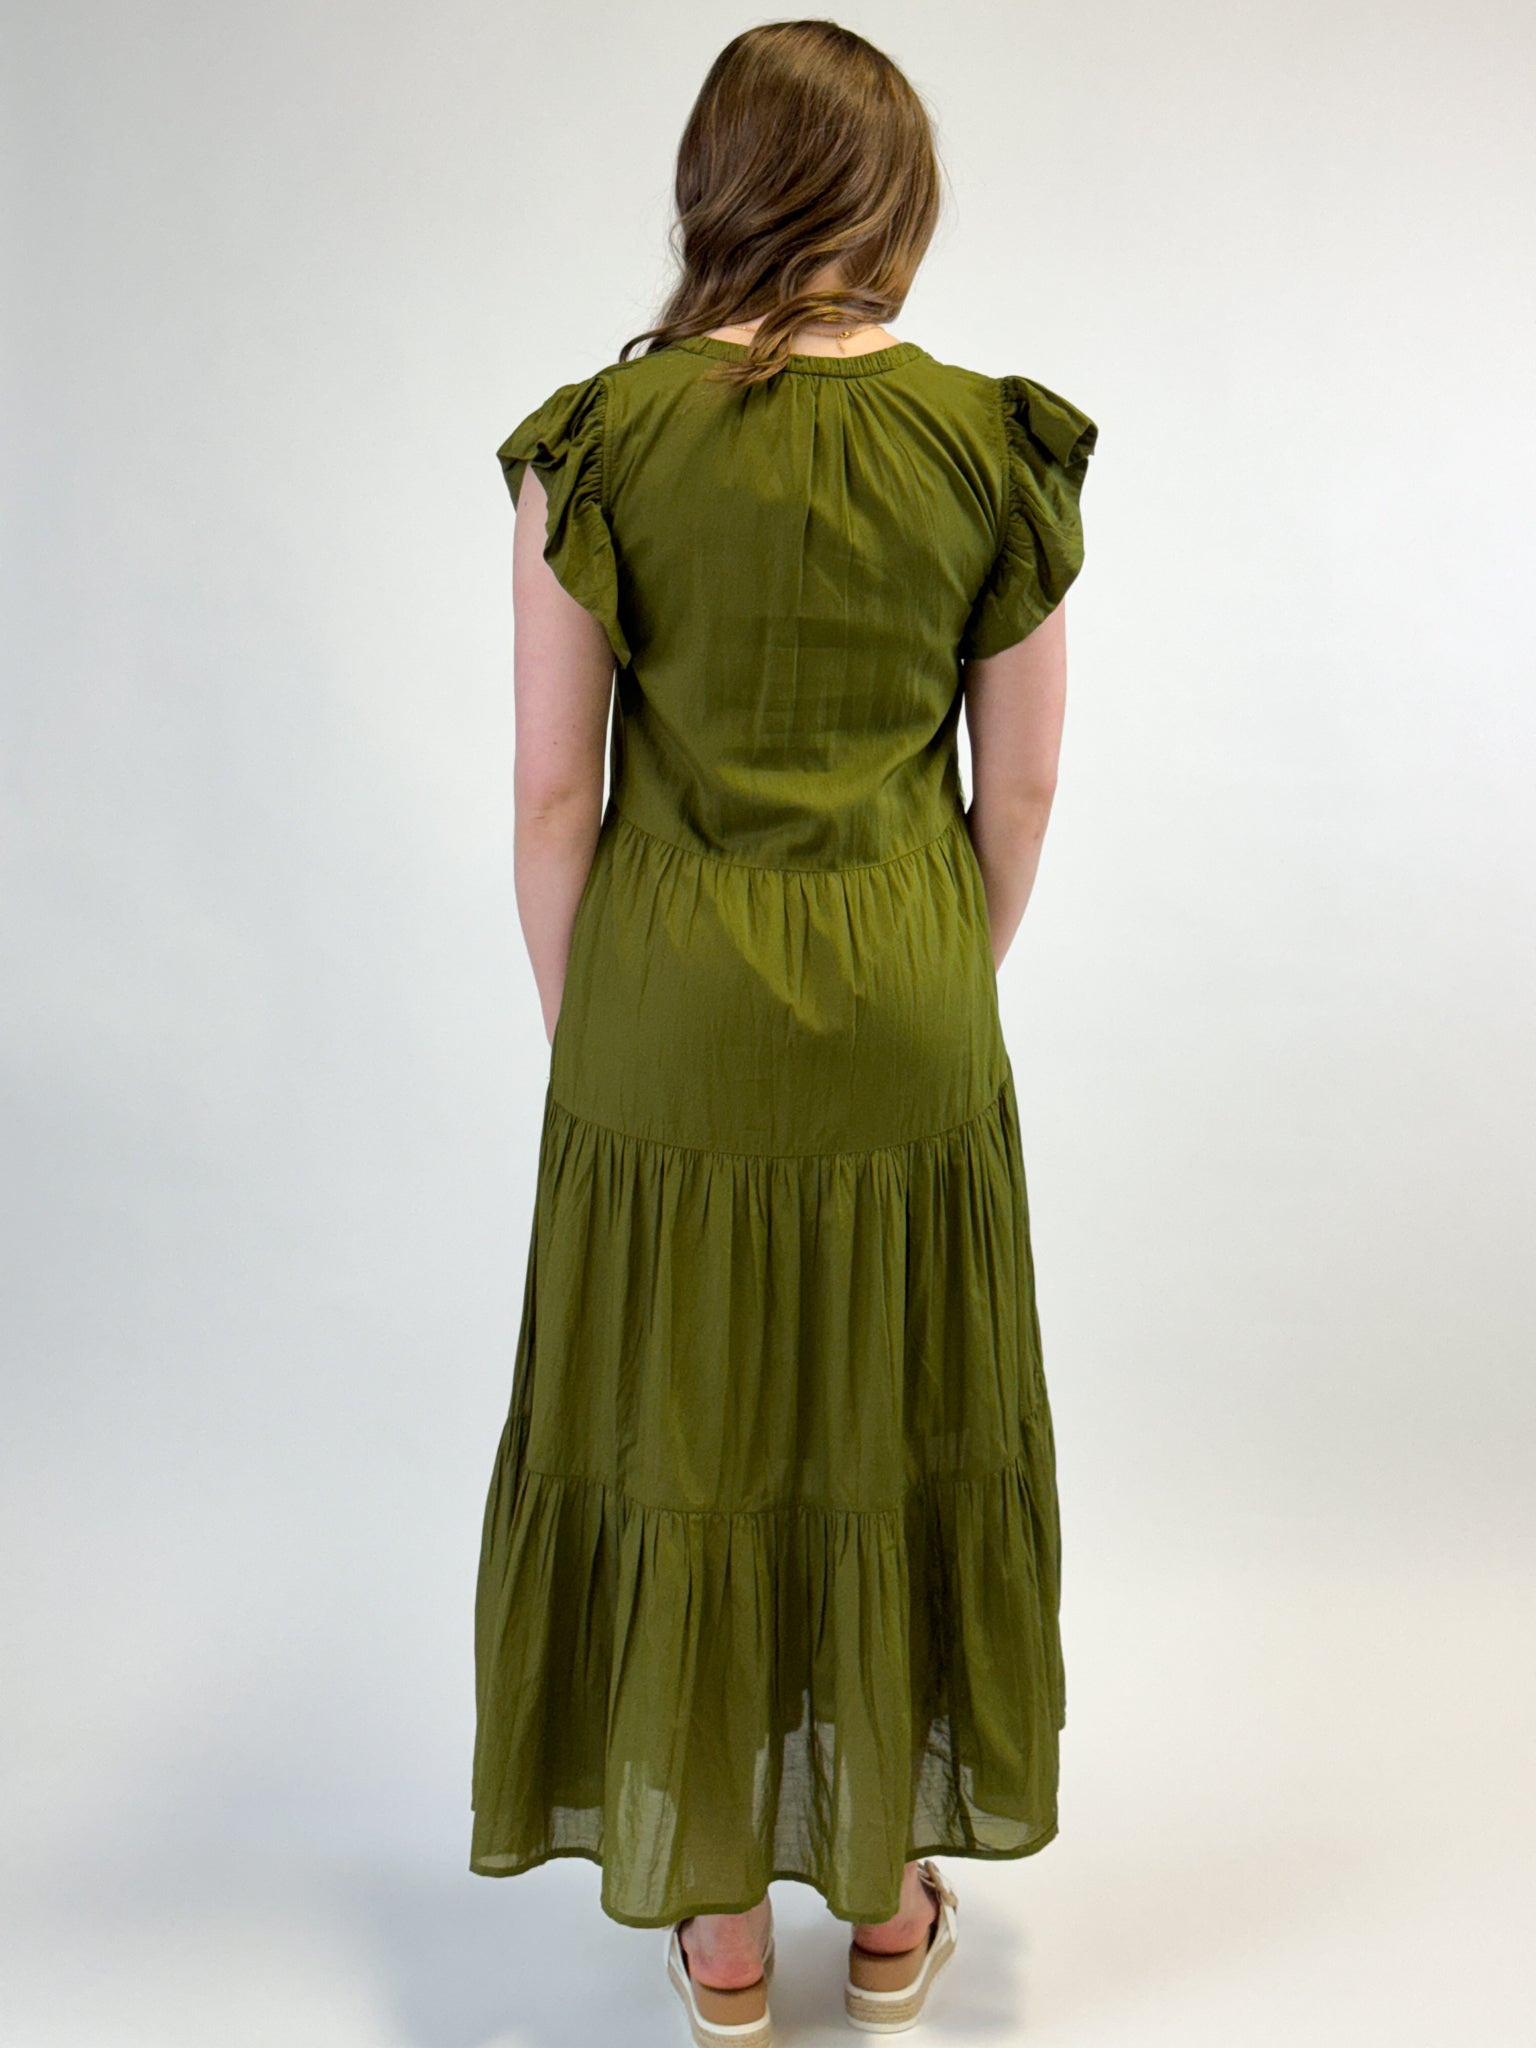 Olive Maxi Dress w/ Ruffle Sleeves